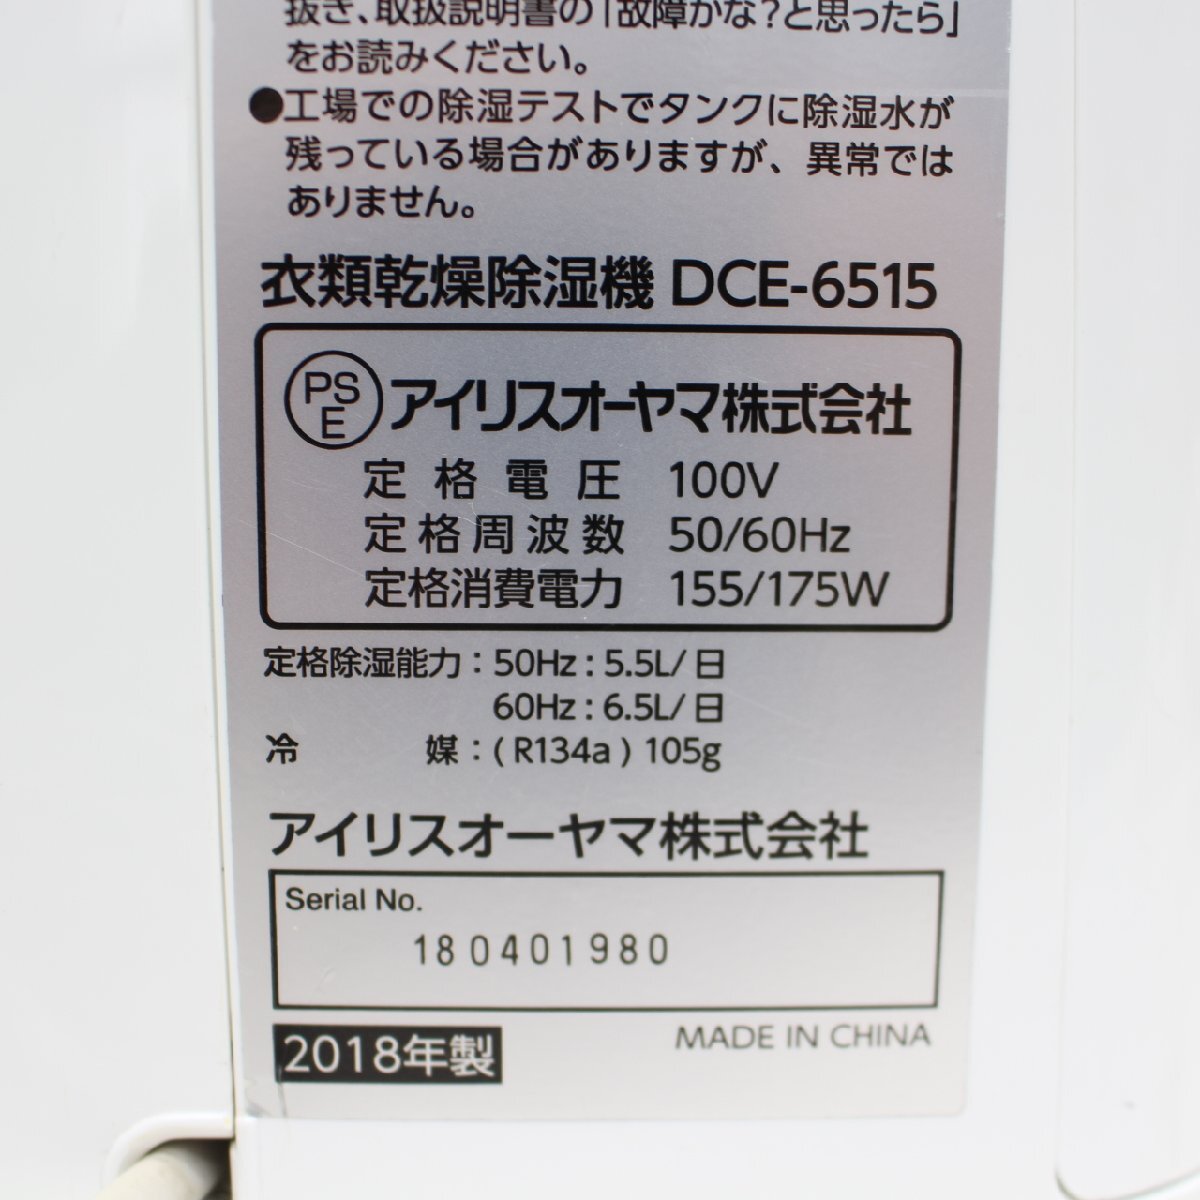 420) IRIS OHYAMA Iris o-yama одежда сухой осушитель DCE-6515 2018 год производства компрессор тип белый 